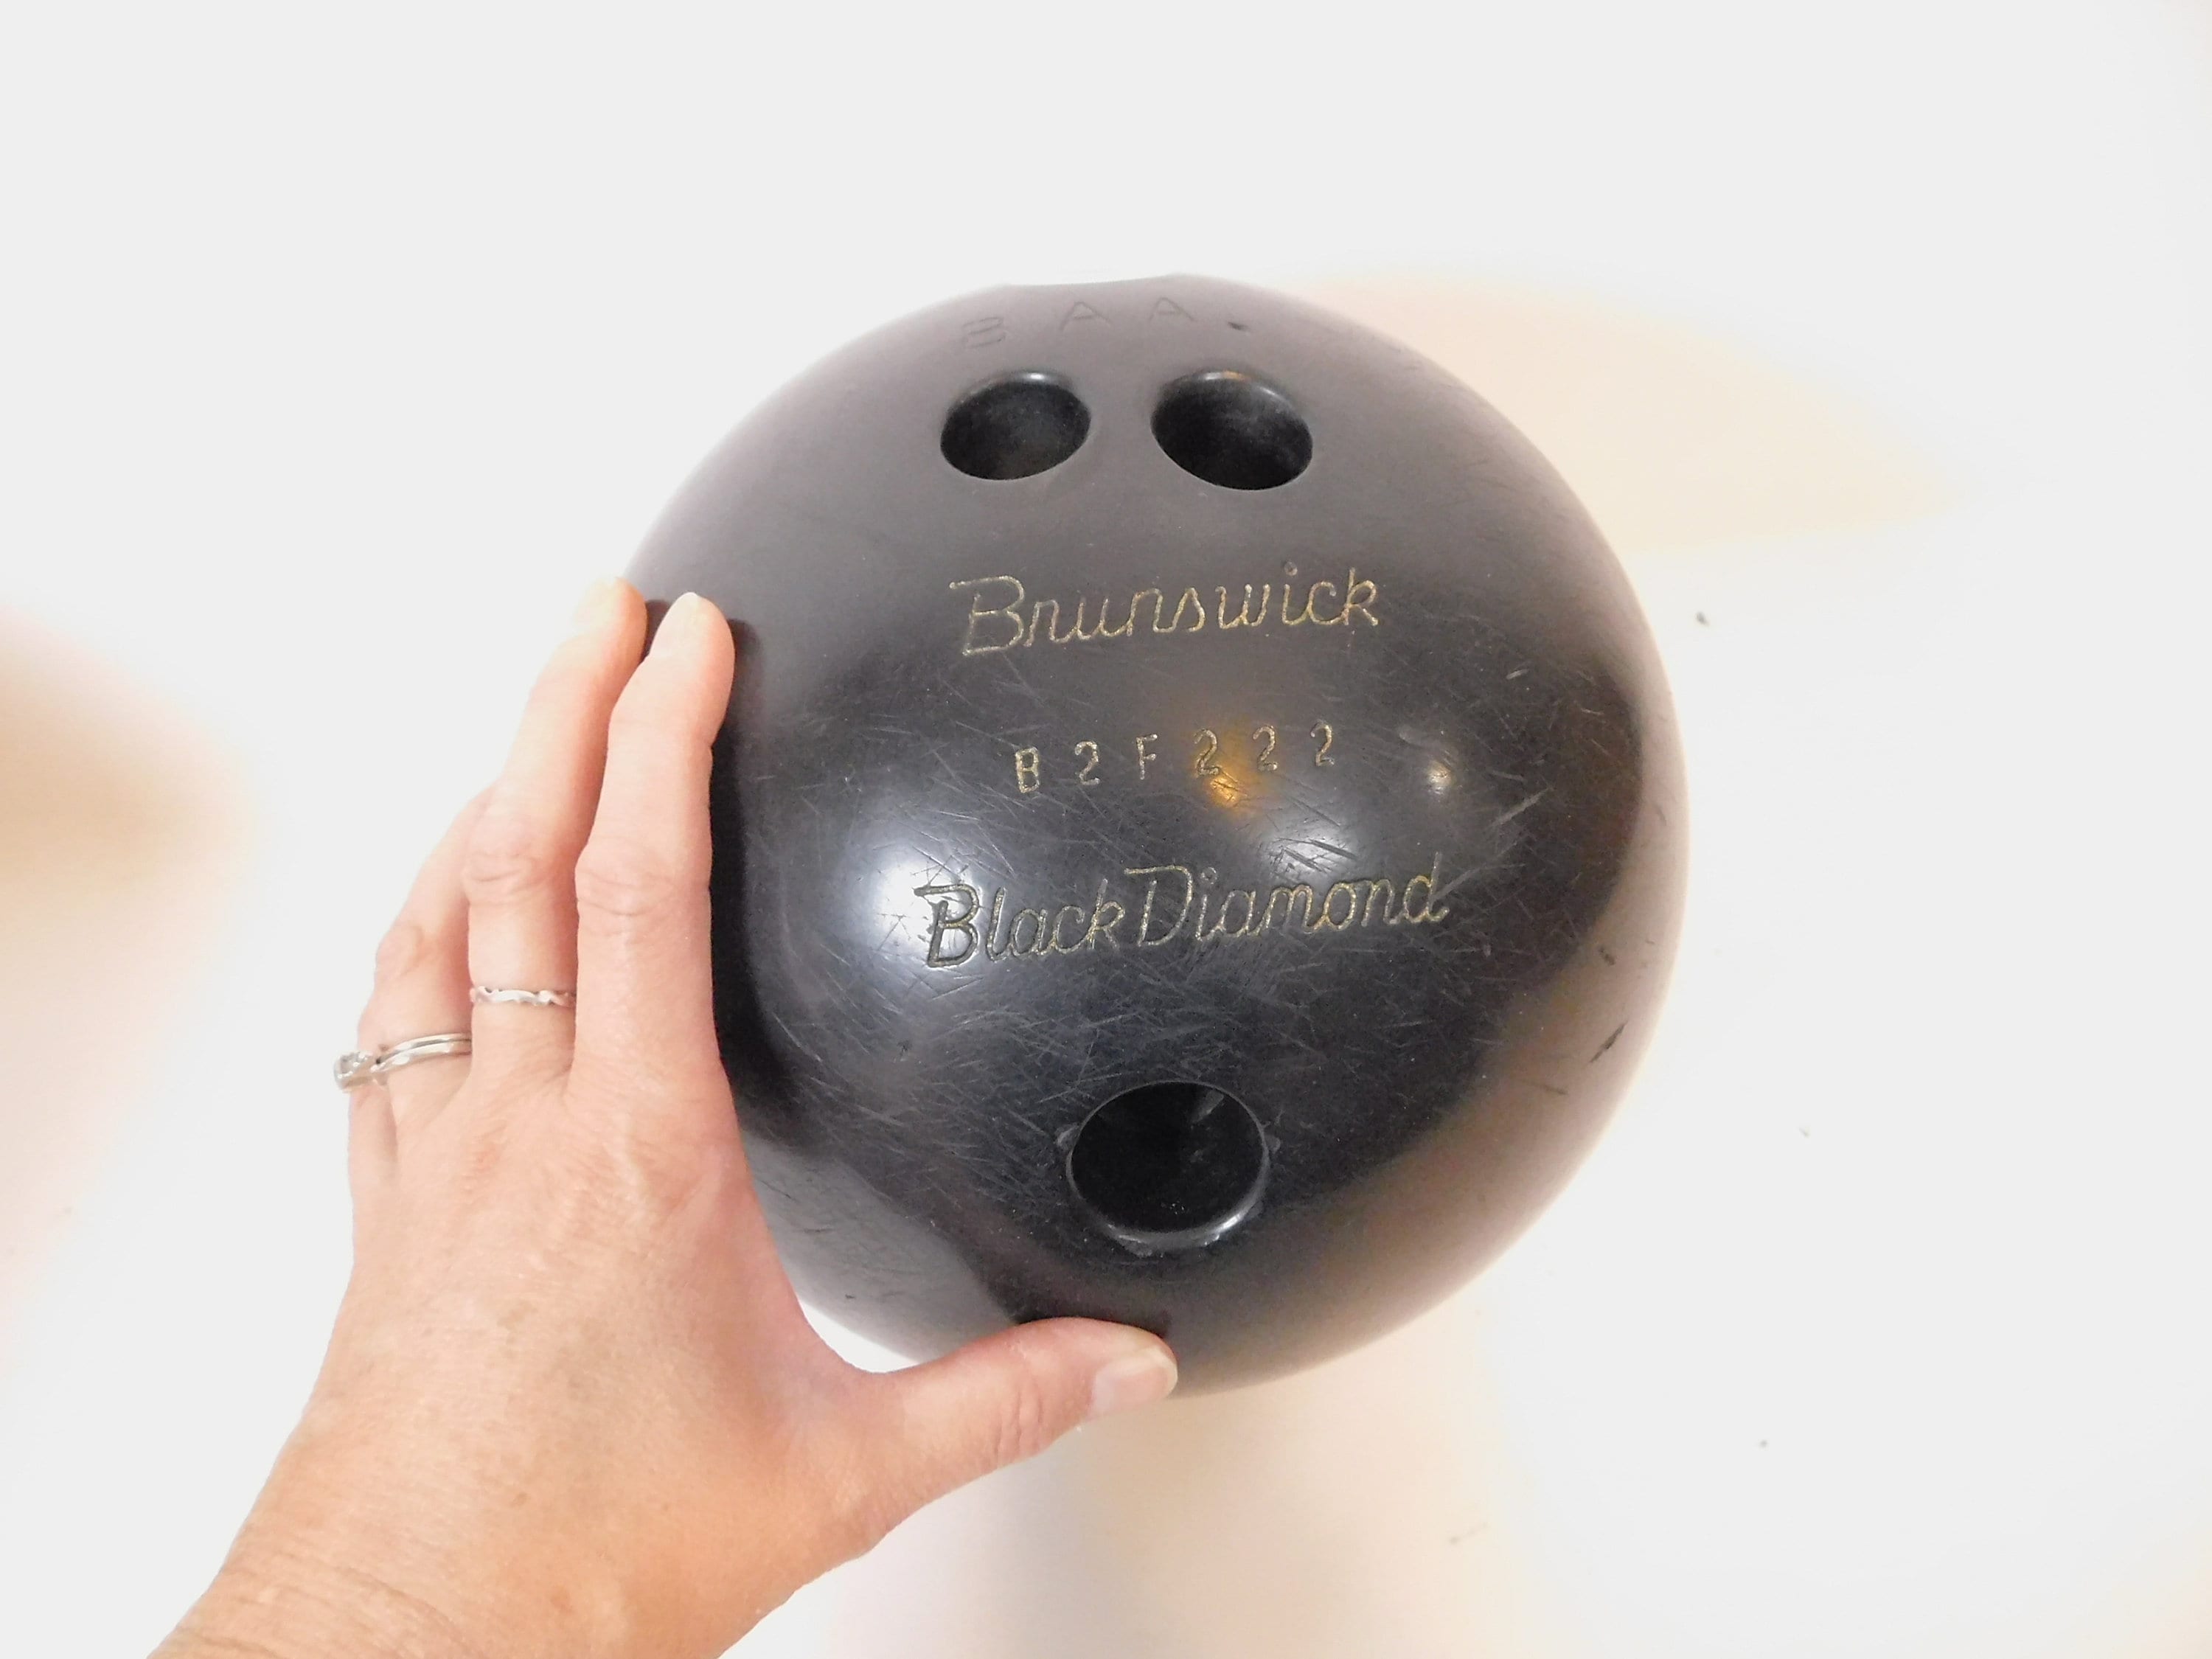 Vintage Brunswick Bowling Bag & Ball Set - Exercise Balls, Facebook  Marketplace